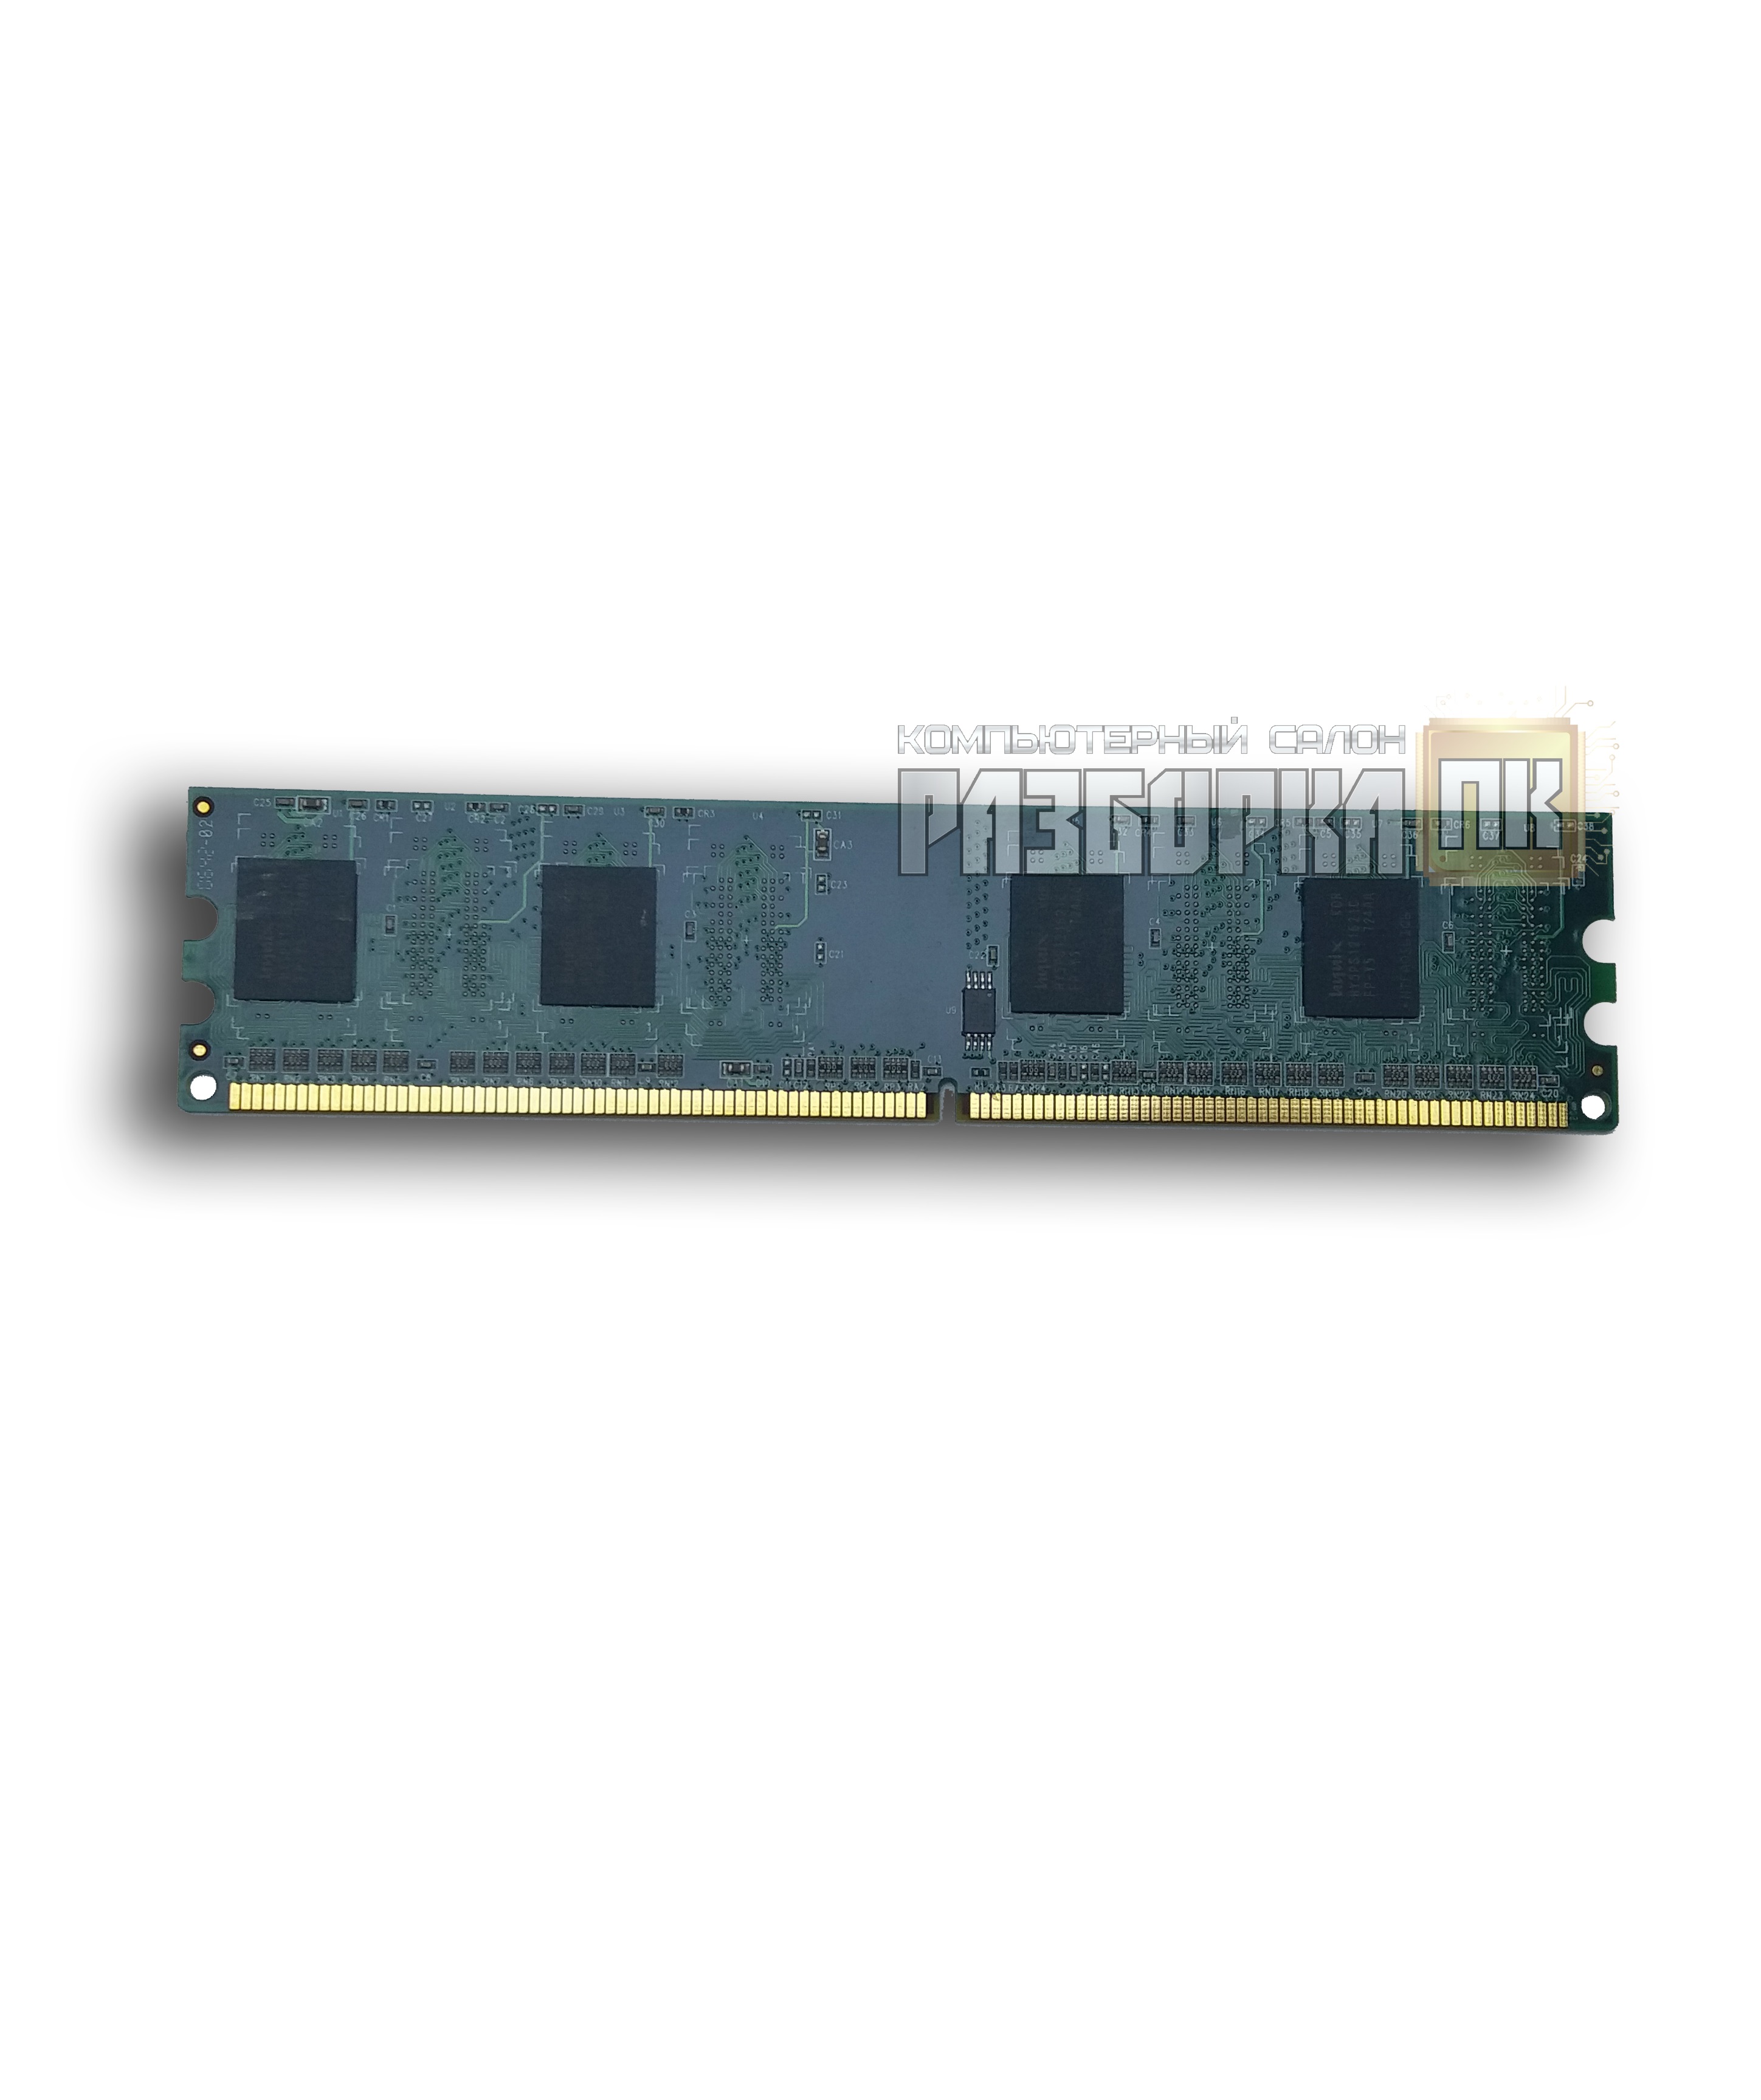 Оперативная память DIMM DDR-II 256MB PC2 5300 667MHZ